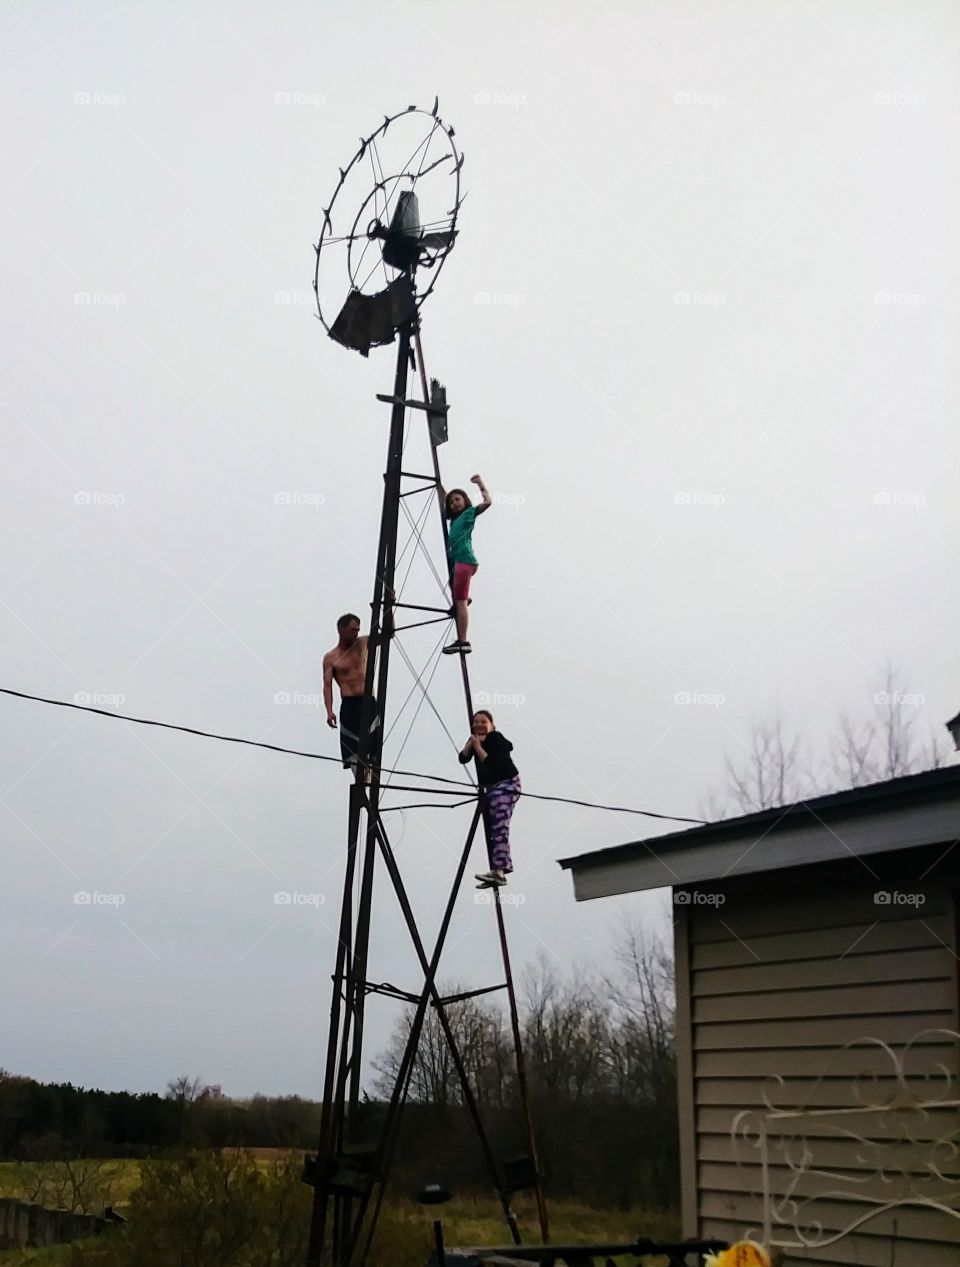 outdoor fun climbing an old windmill